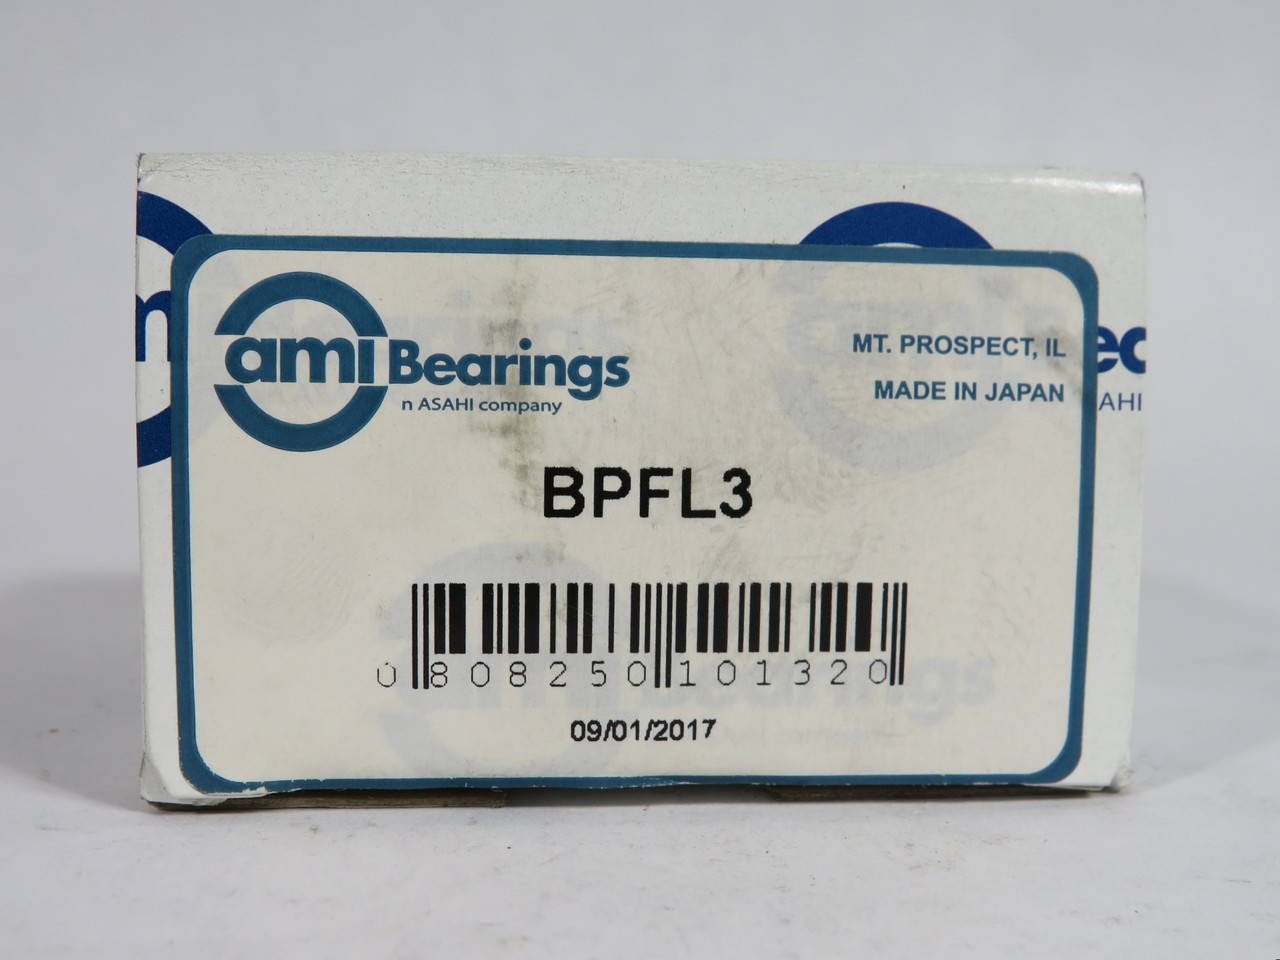 AMI Bearings BPFL3 Set Screw Locking Two-Bolt Flange Unit 17mm Shaft NEW